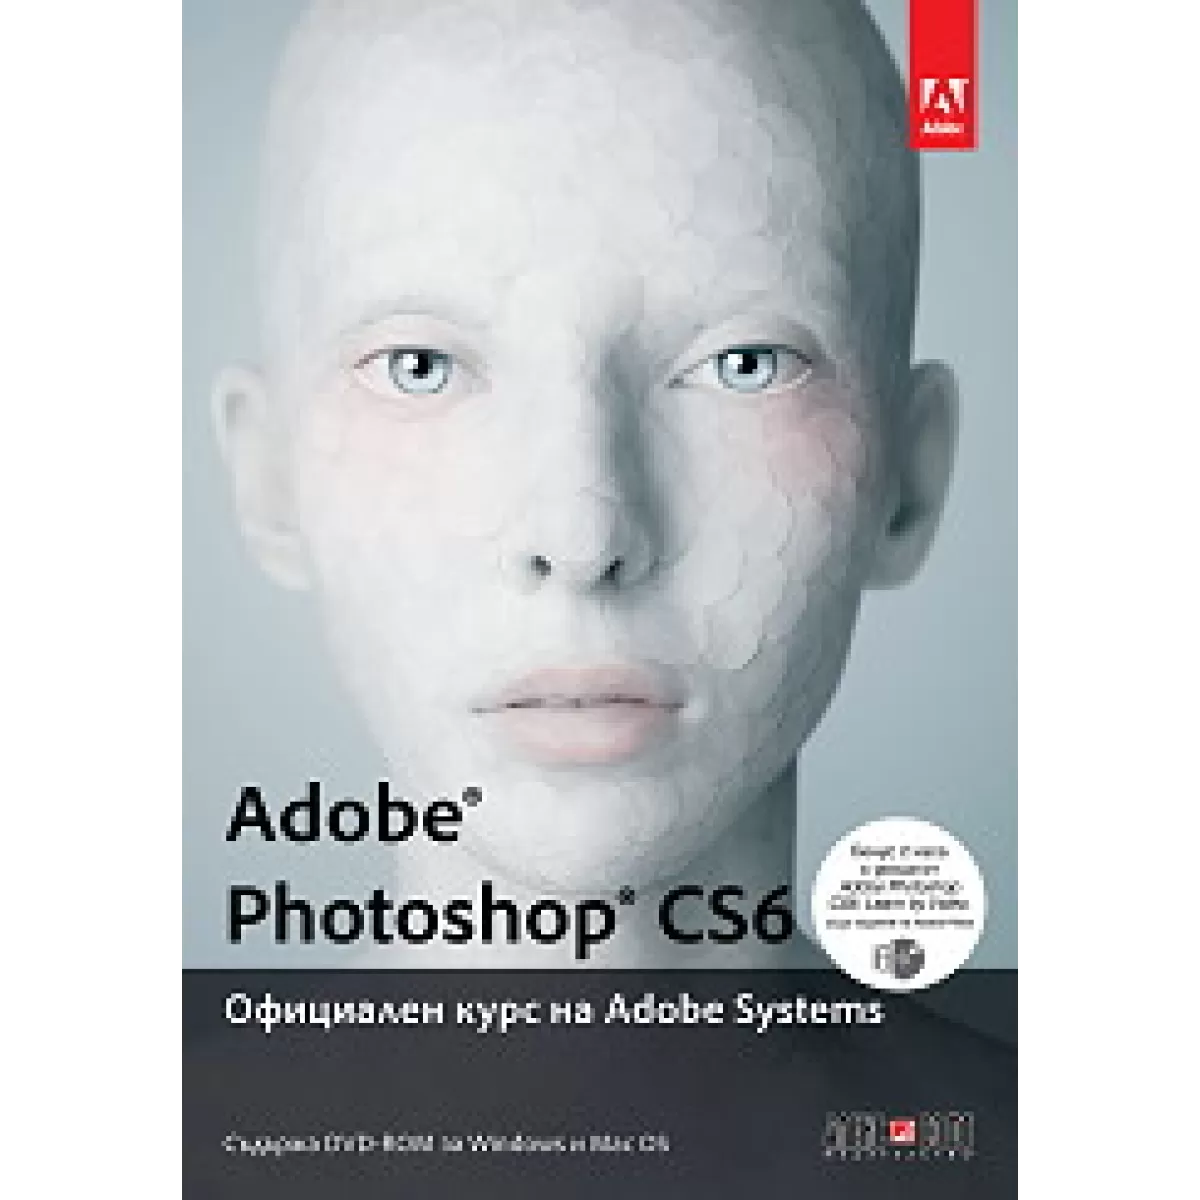 Adobe Photoshop CS6. Официален курс на Adobe Systems